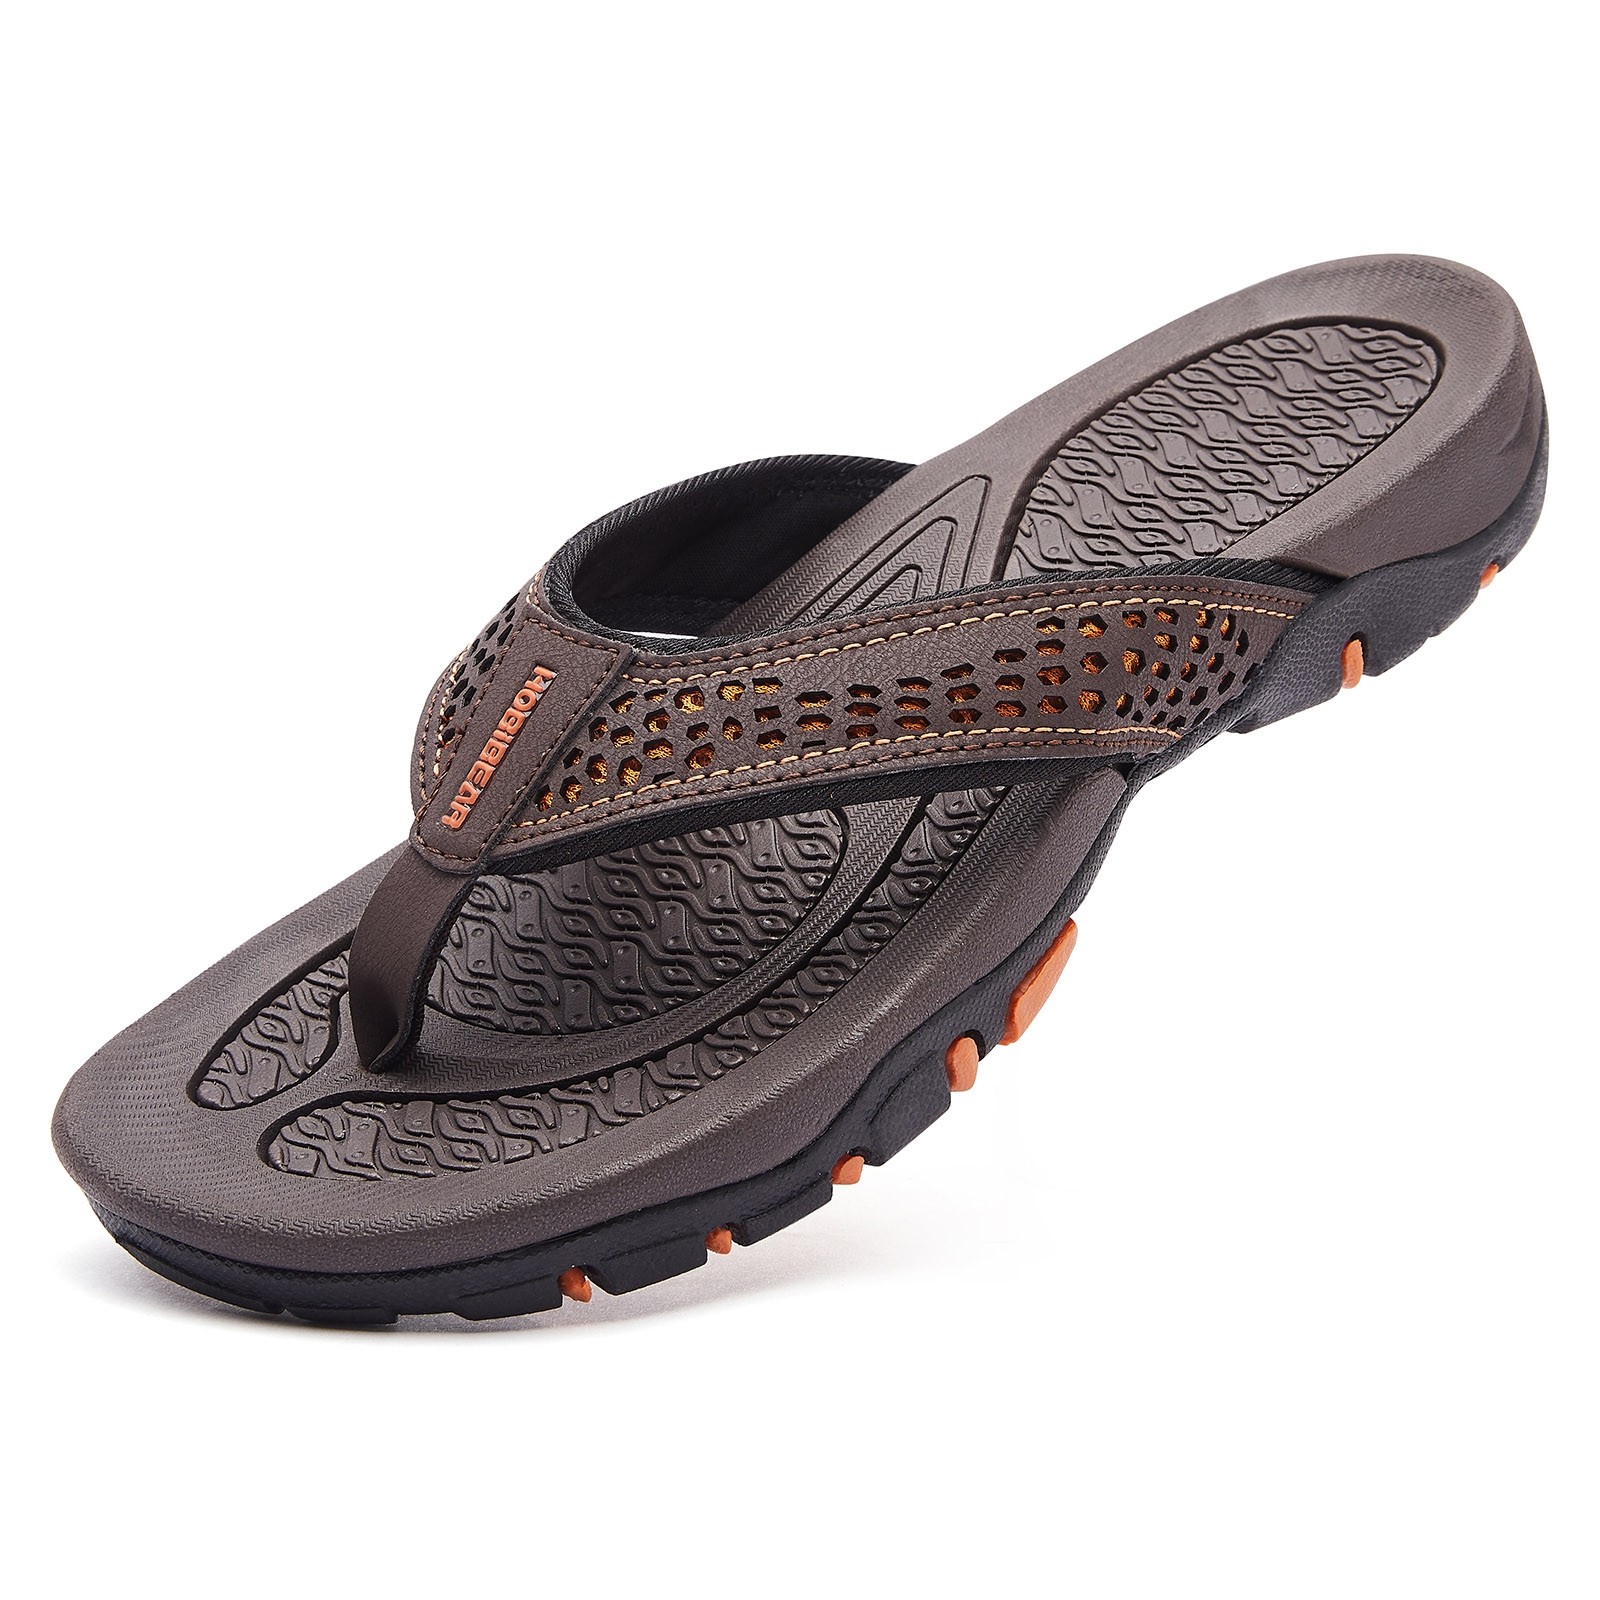 Mens Thong Sandals Indoor and Outdoor Beach Flip Flop Brown/Orange (Size 9)